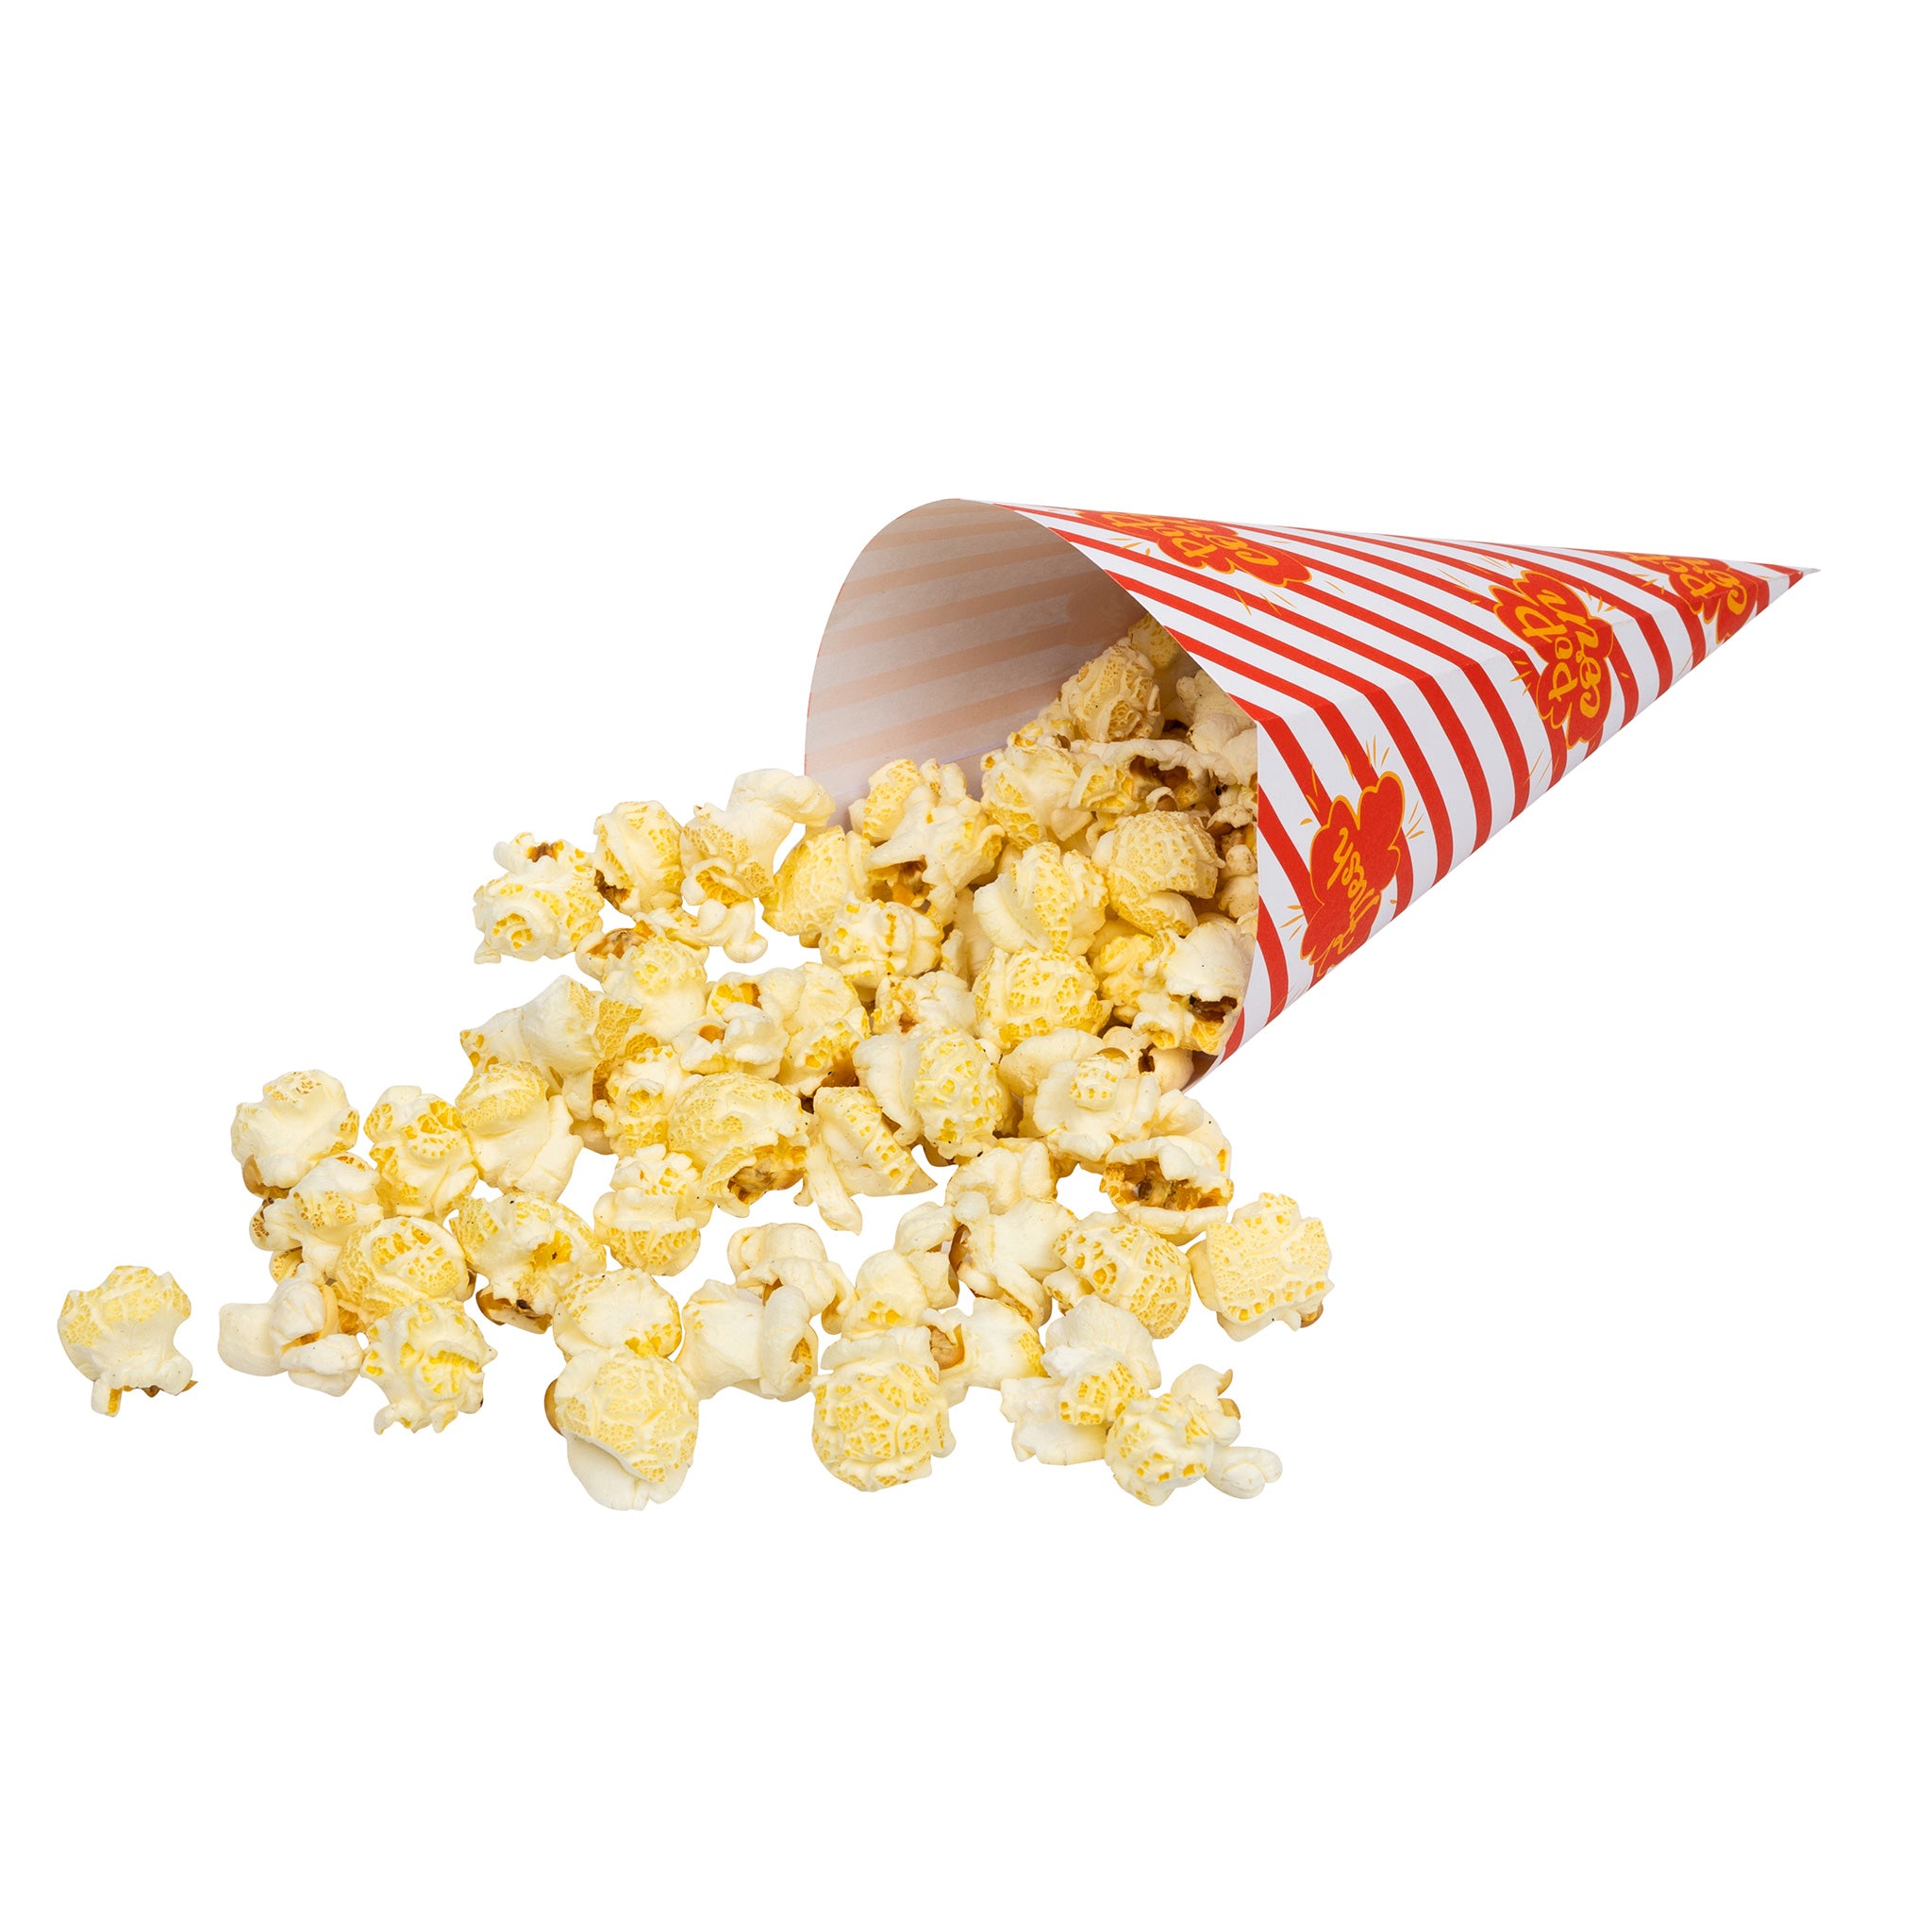 Red and White Striped Popcorn cone